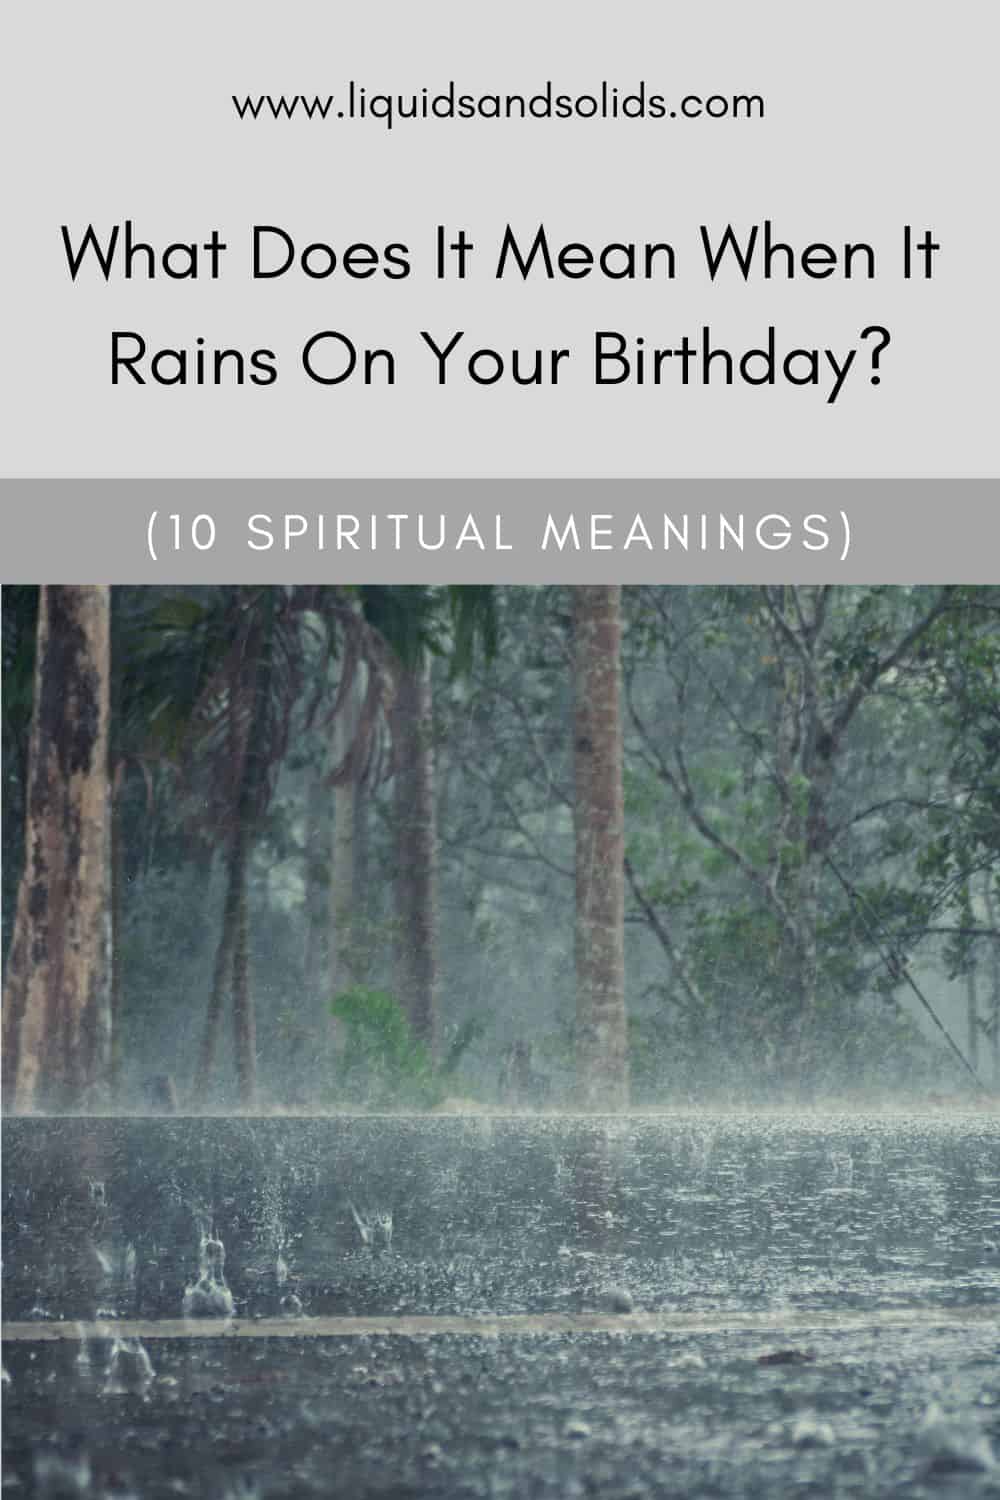 What Does Rain Symbolize?